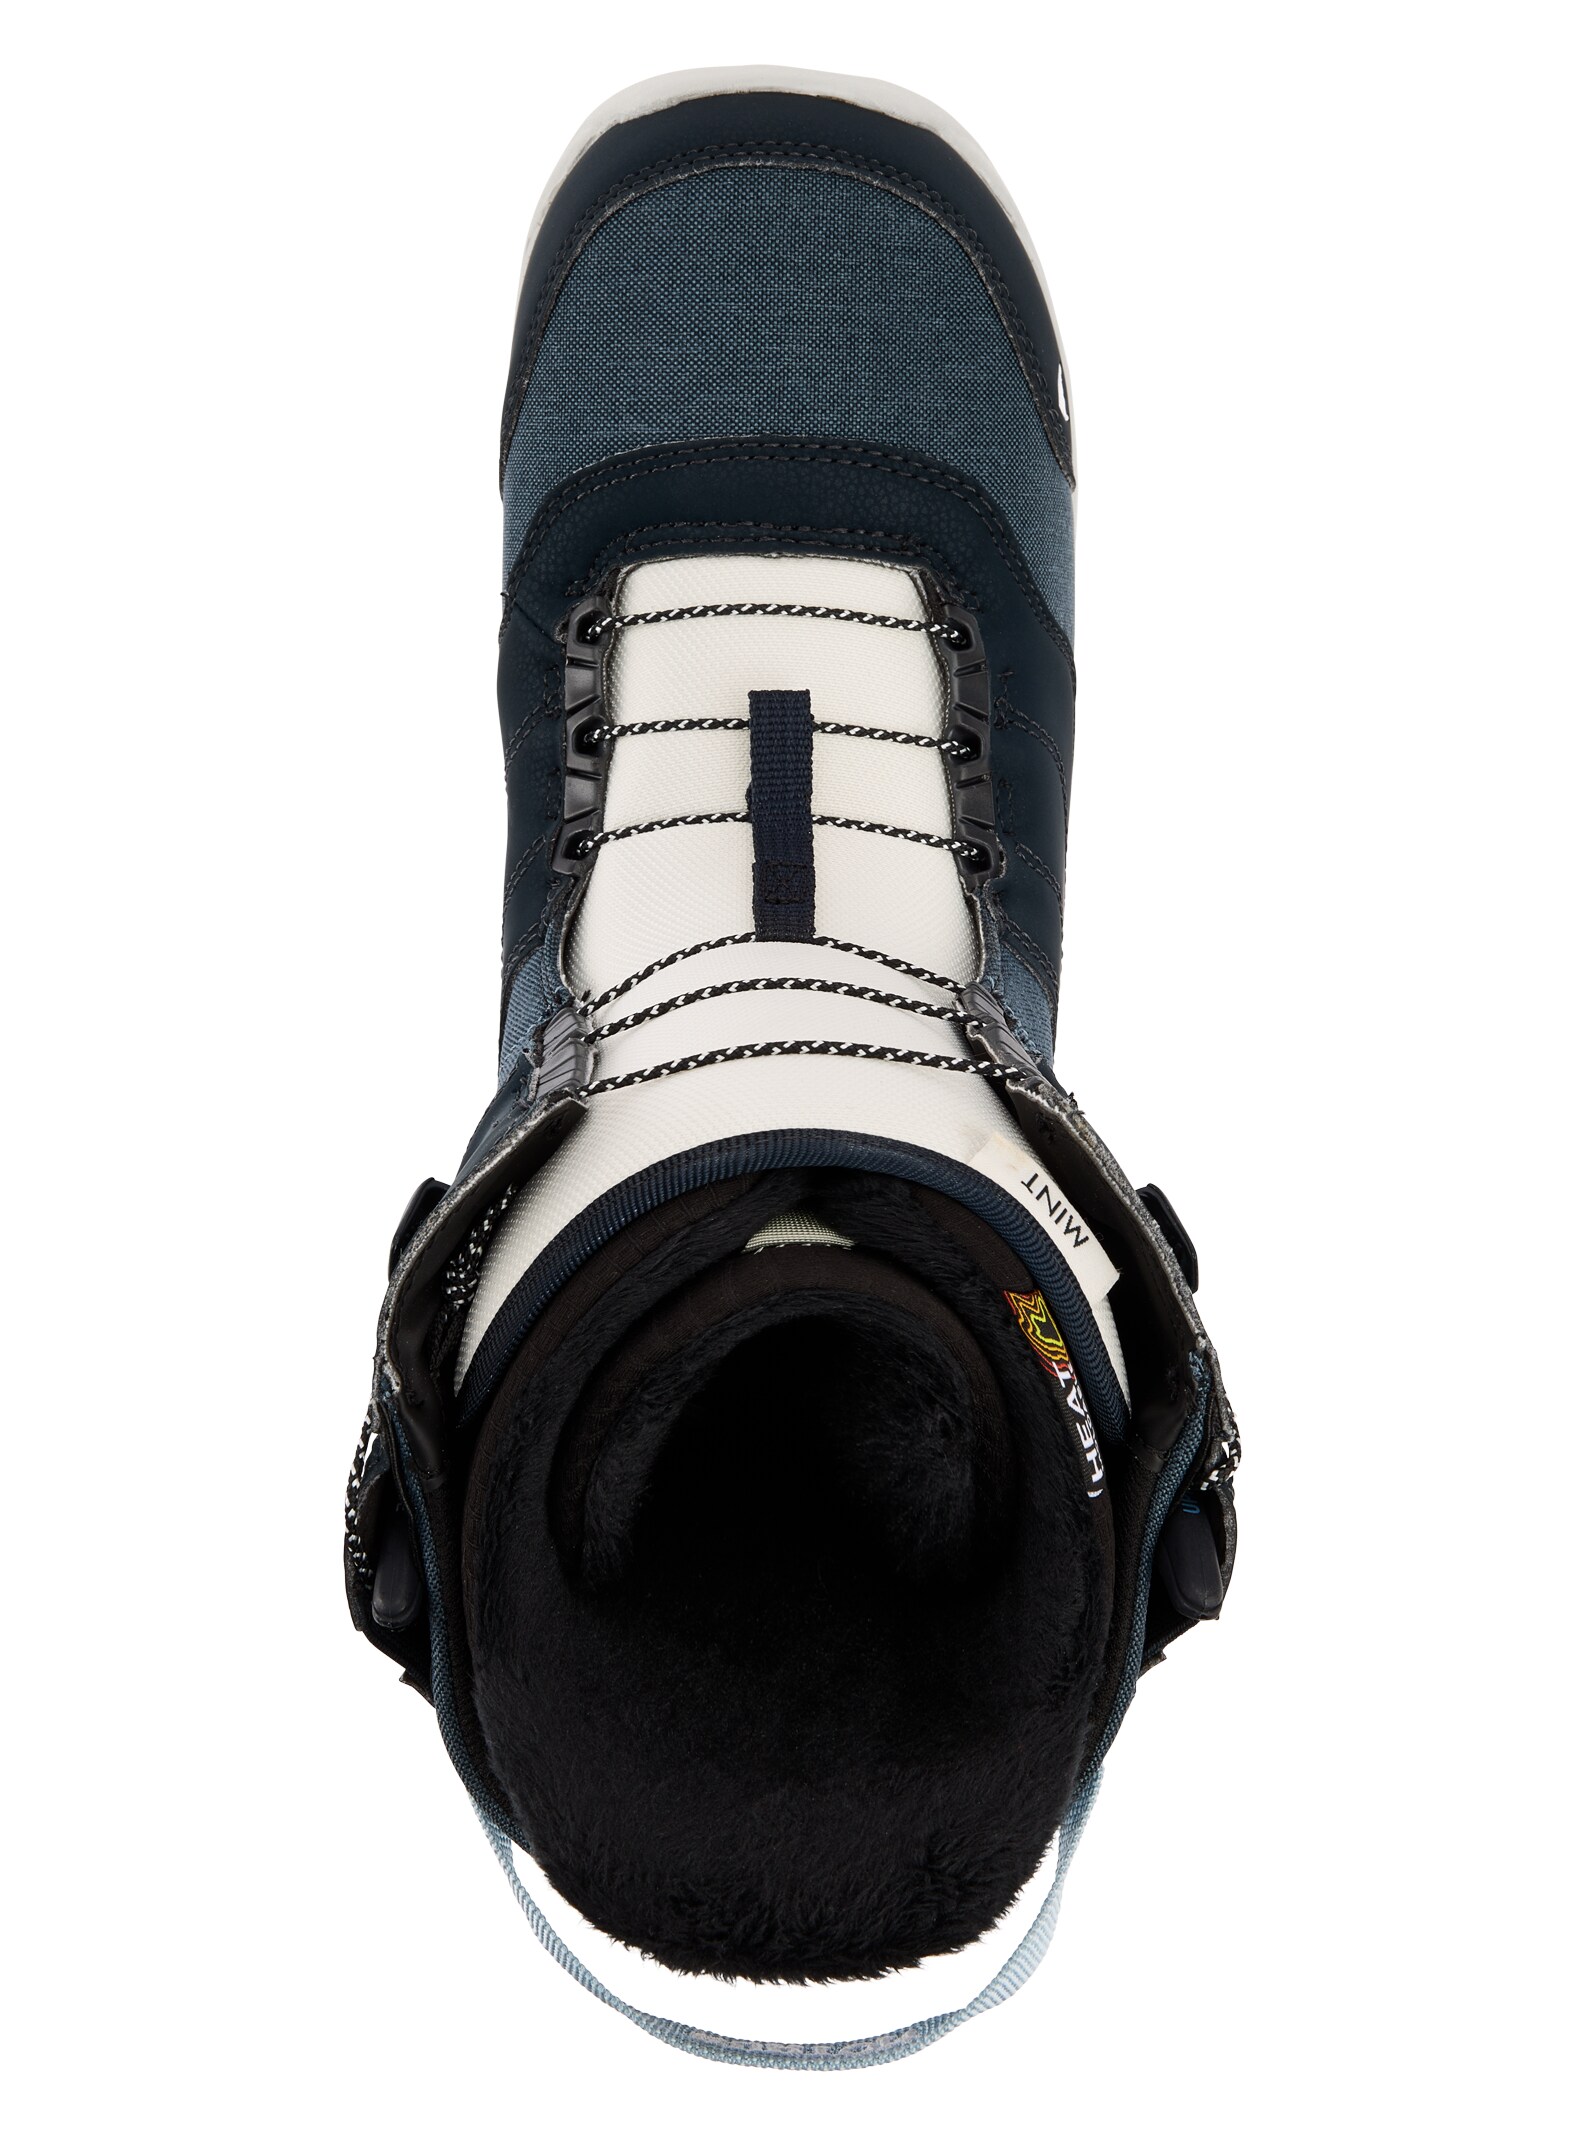 Ботинки для сноуборда Burton Mint купить в Boardshop №1